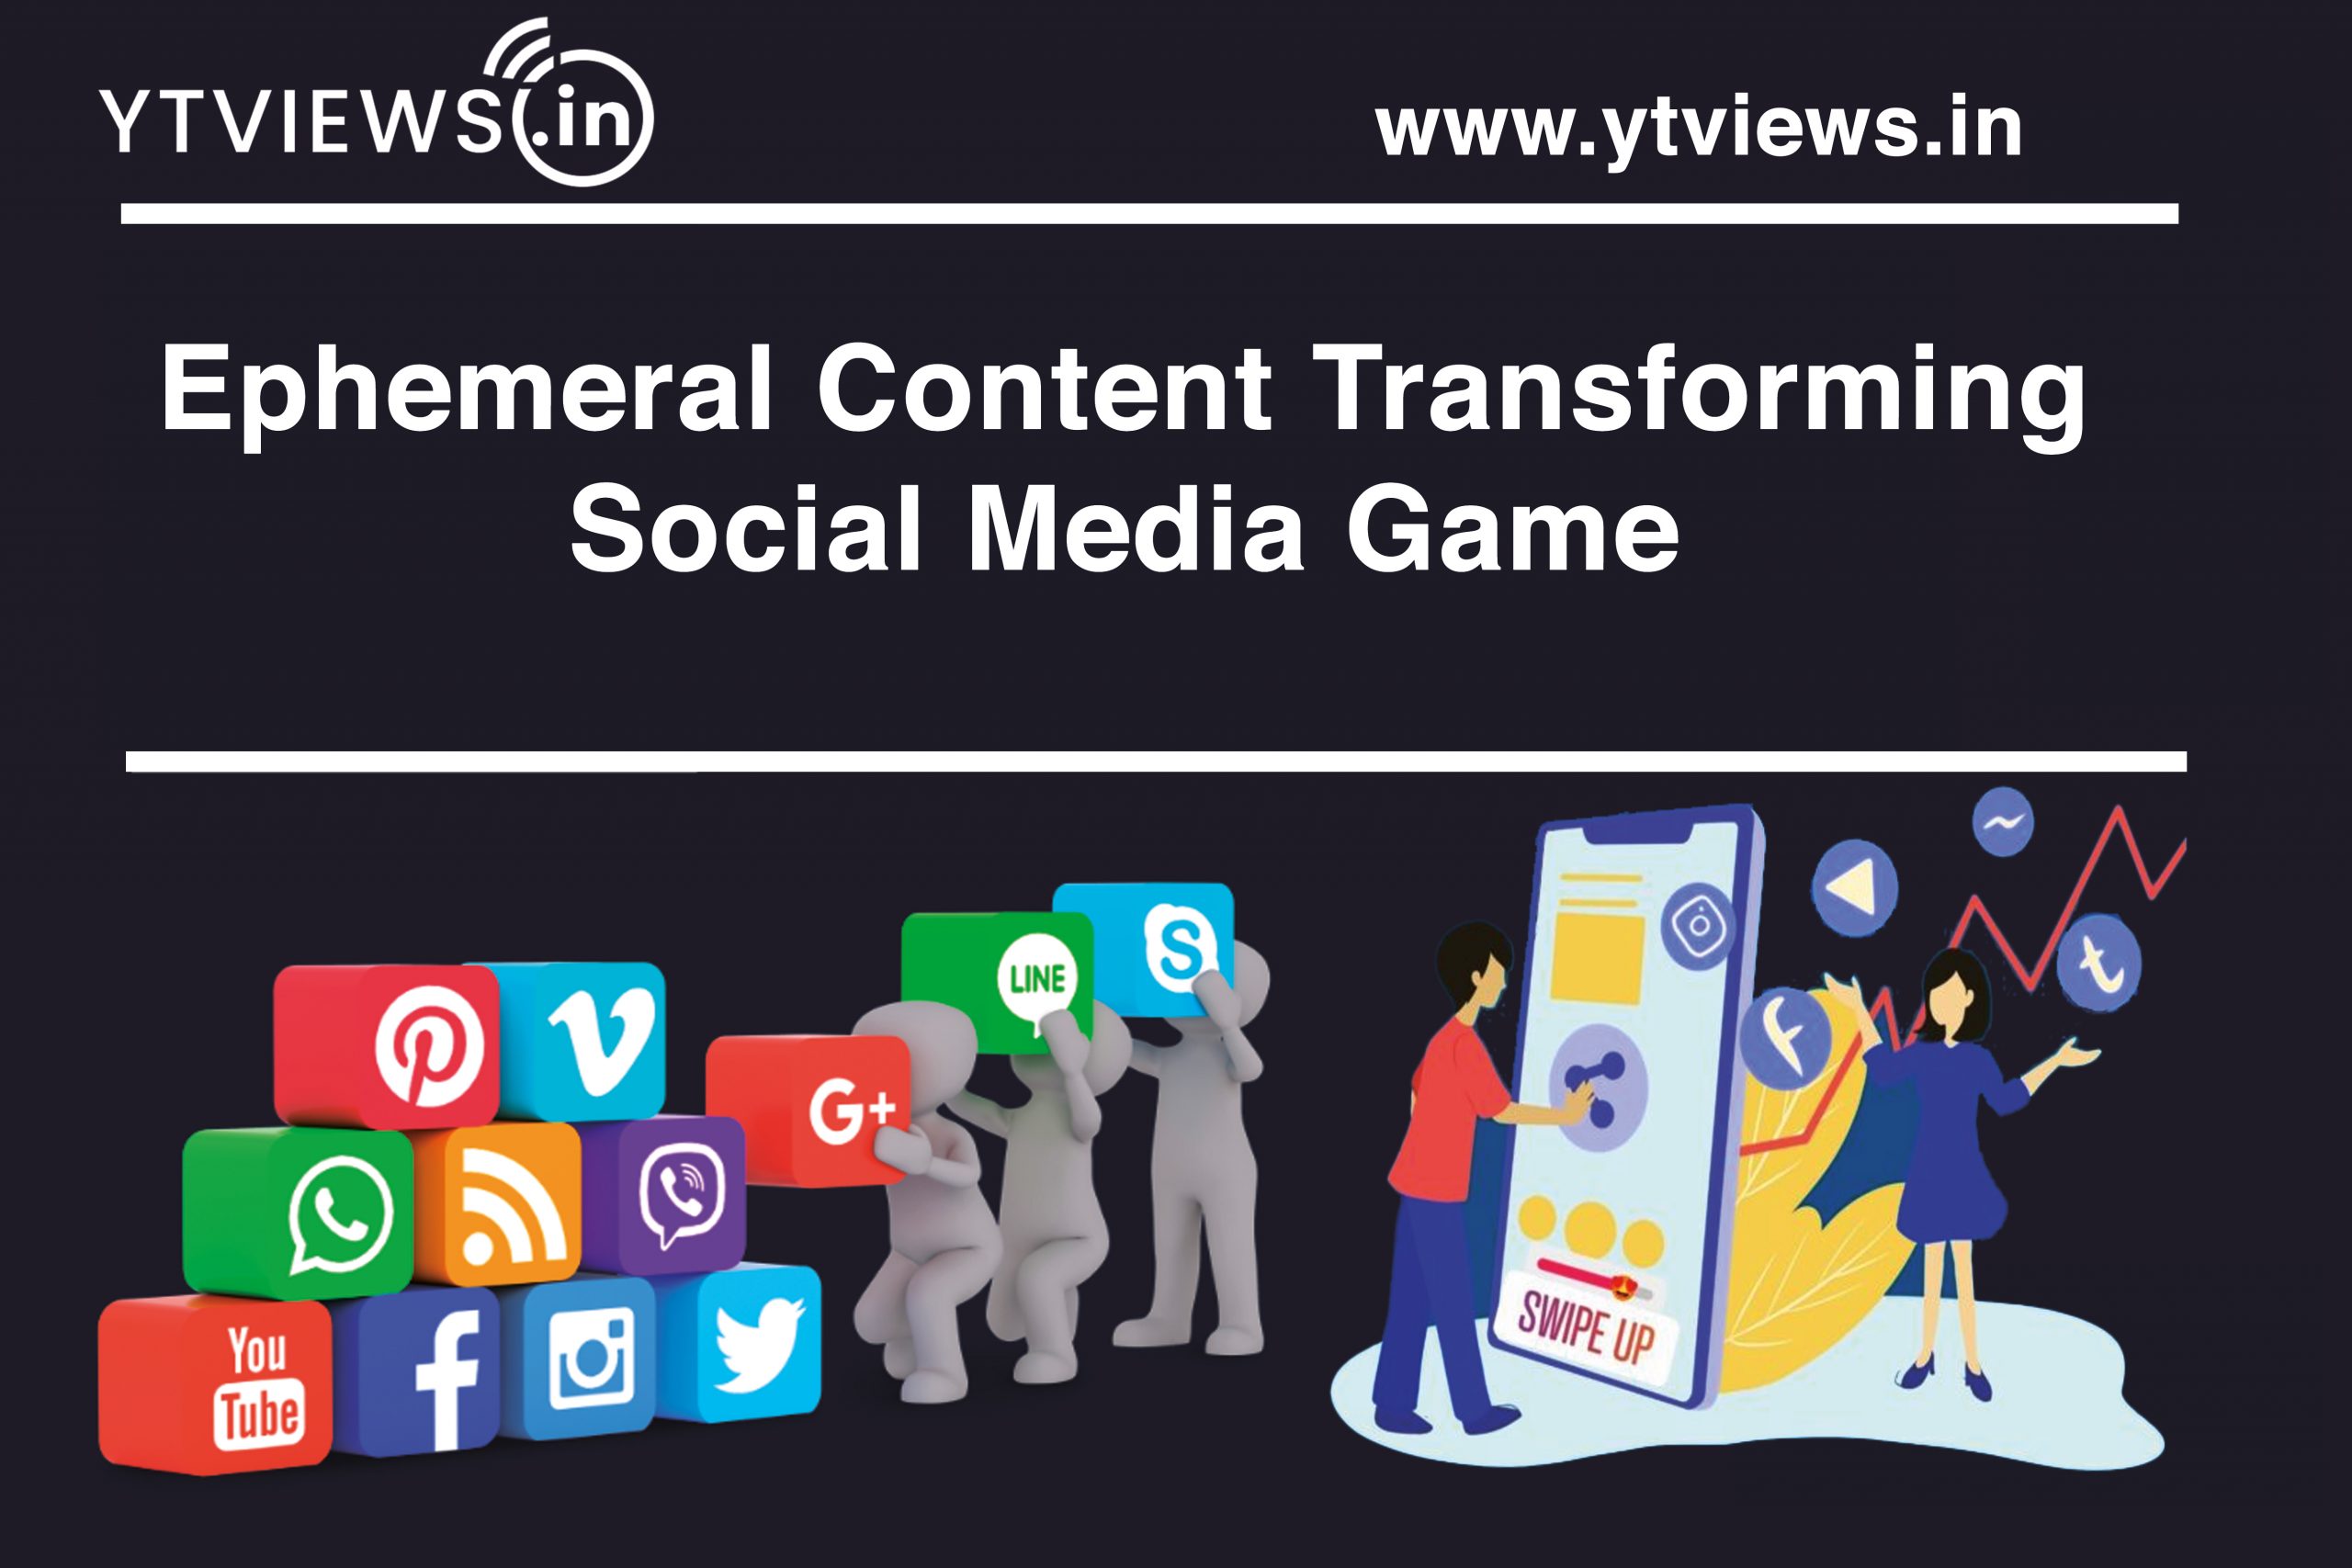 Ephemeral Content transforming Social Media Game